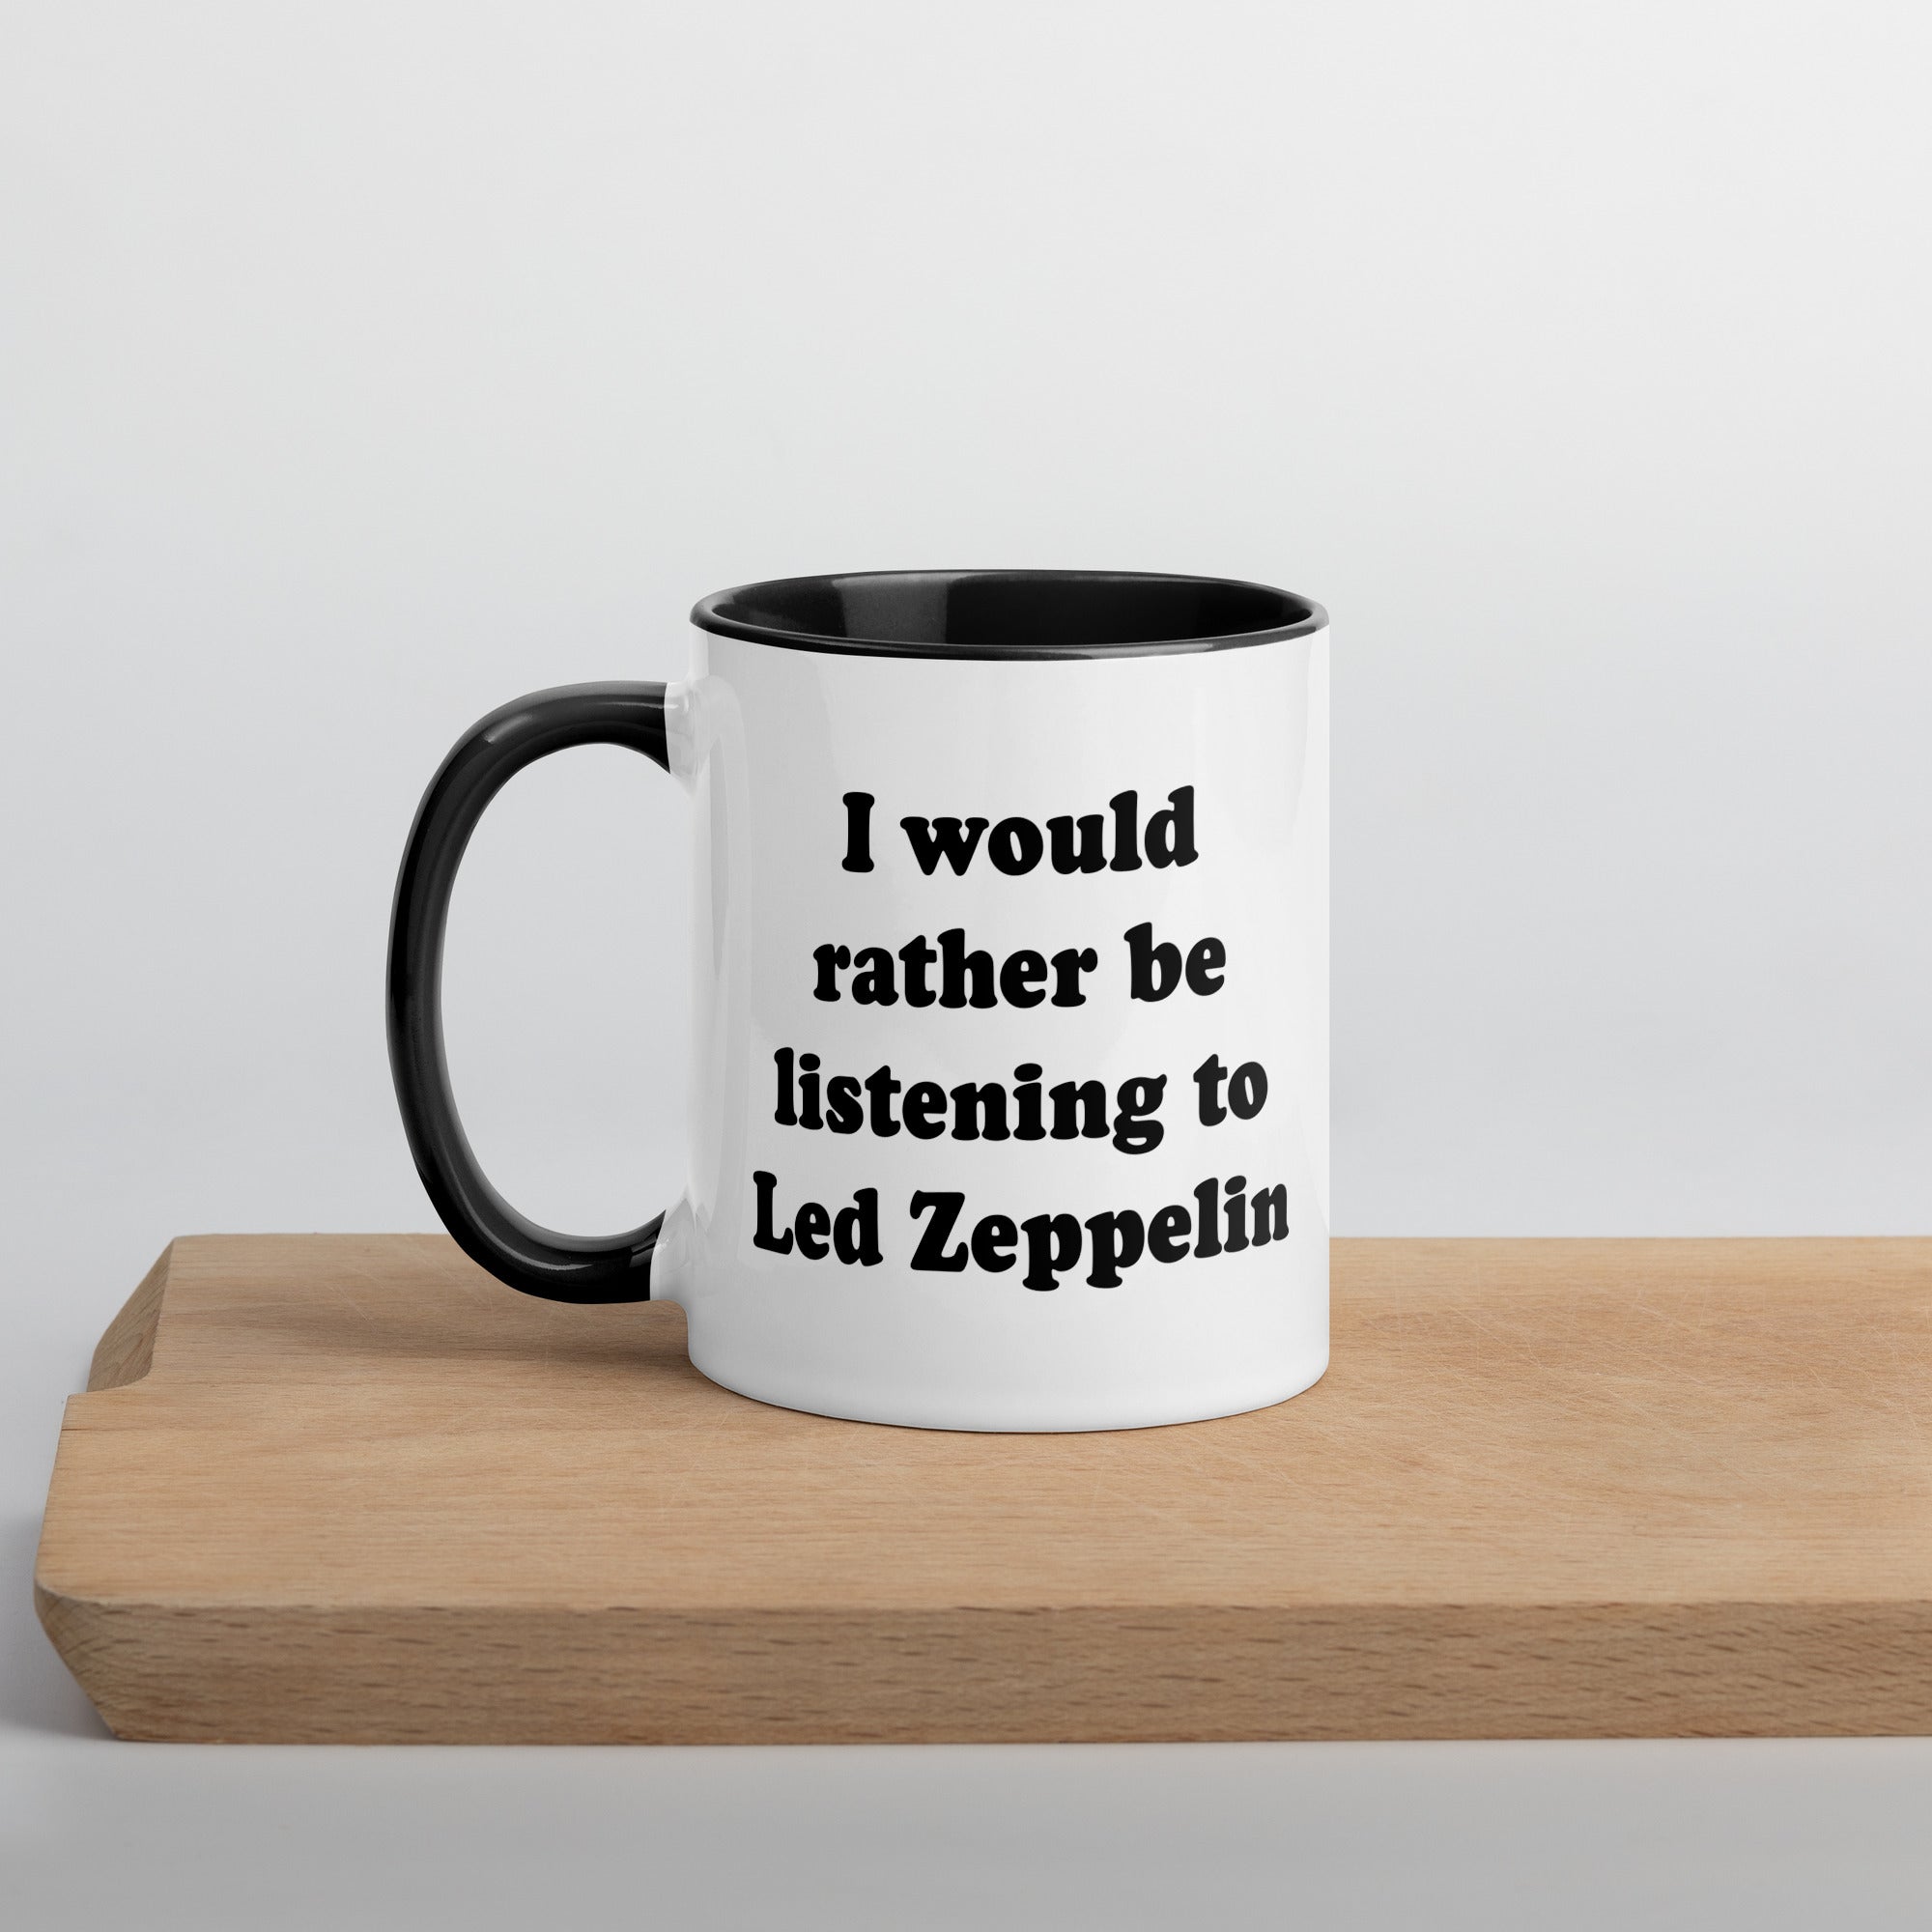 I WOULD RATHER BE LISTENING TO LED ZEPPELIN Printed Mug - Black